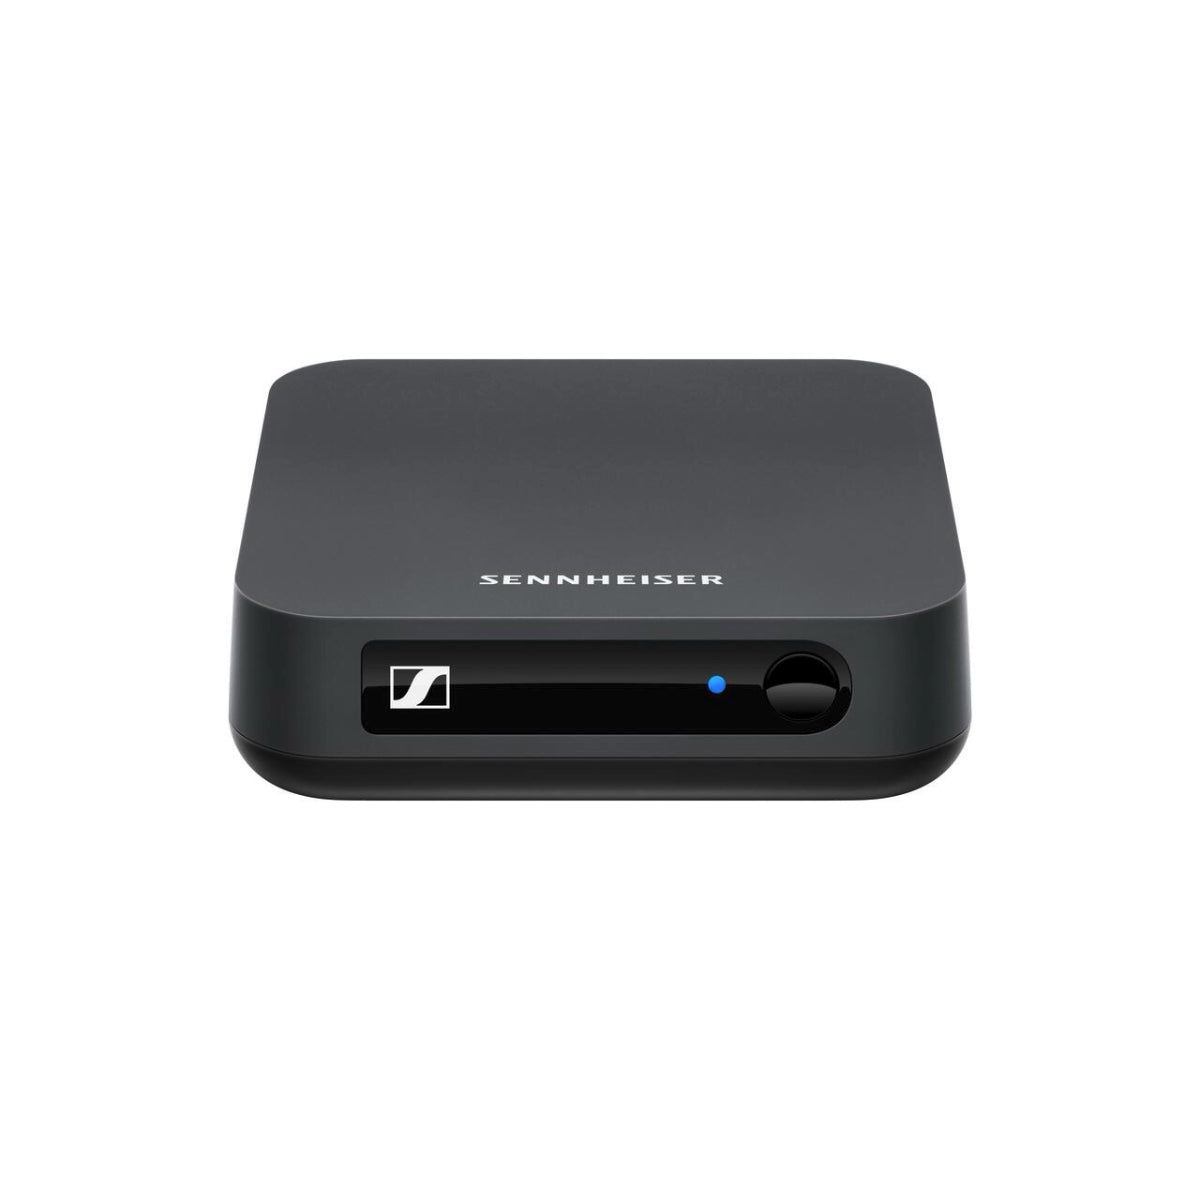 Sennheiser BT T100 Bluetooth Audio Transmitter, 1.5m USB A To USB Mircro-B Charging Cable